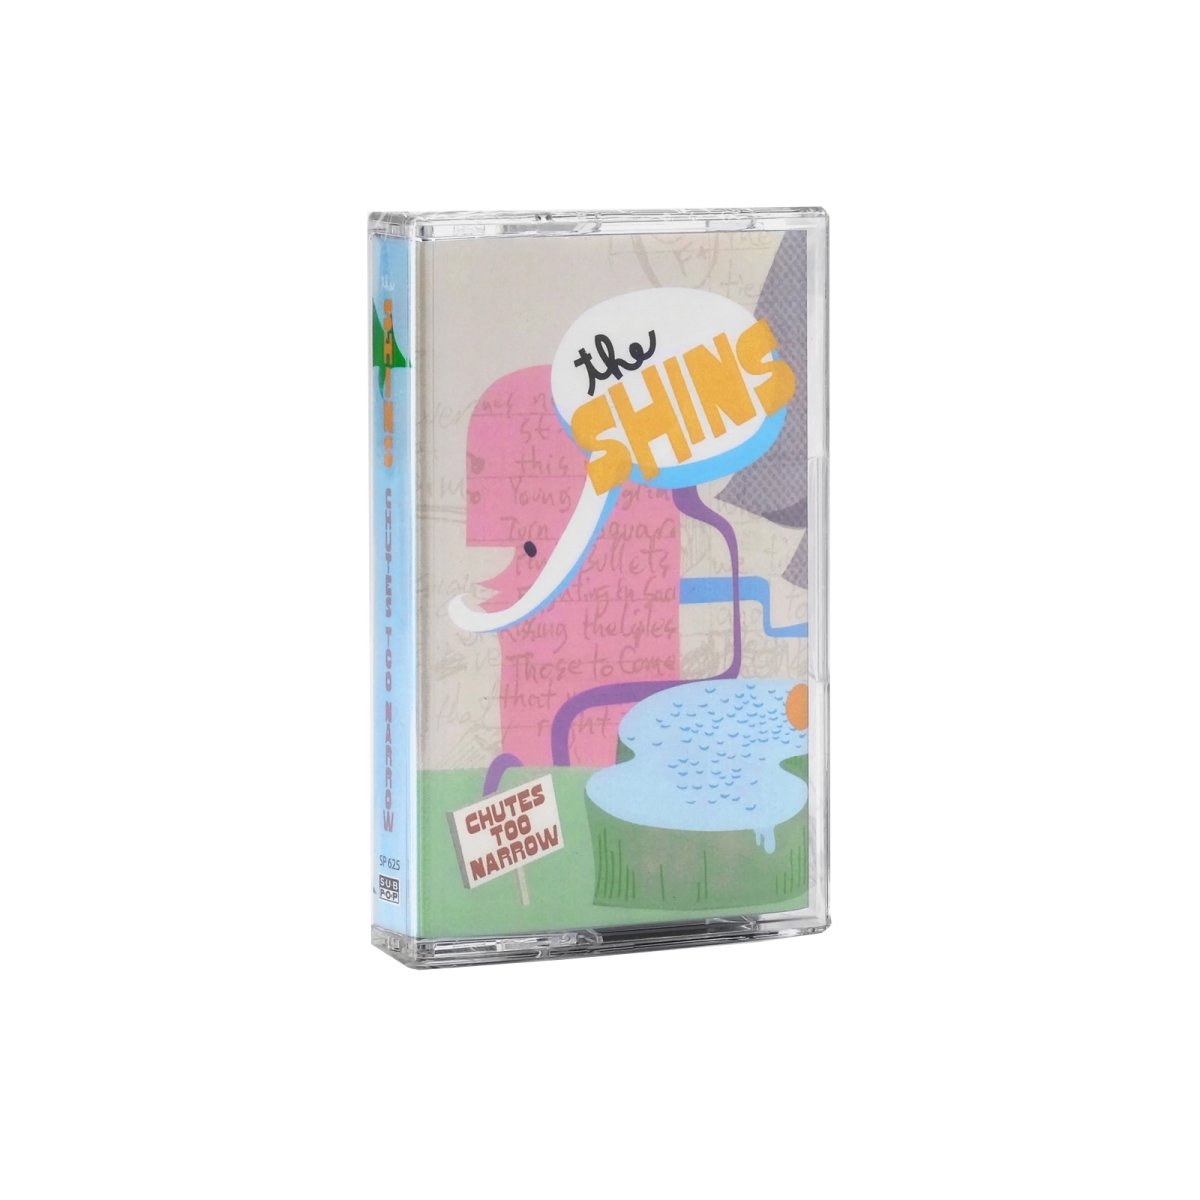 The Shins - Chutes Too Narrow Vinyl